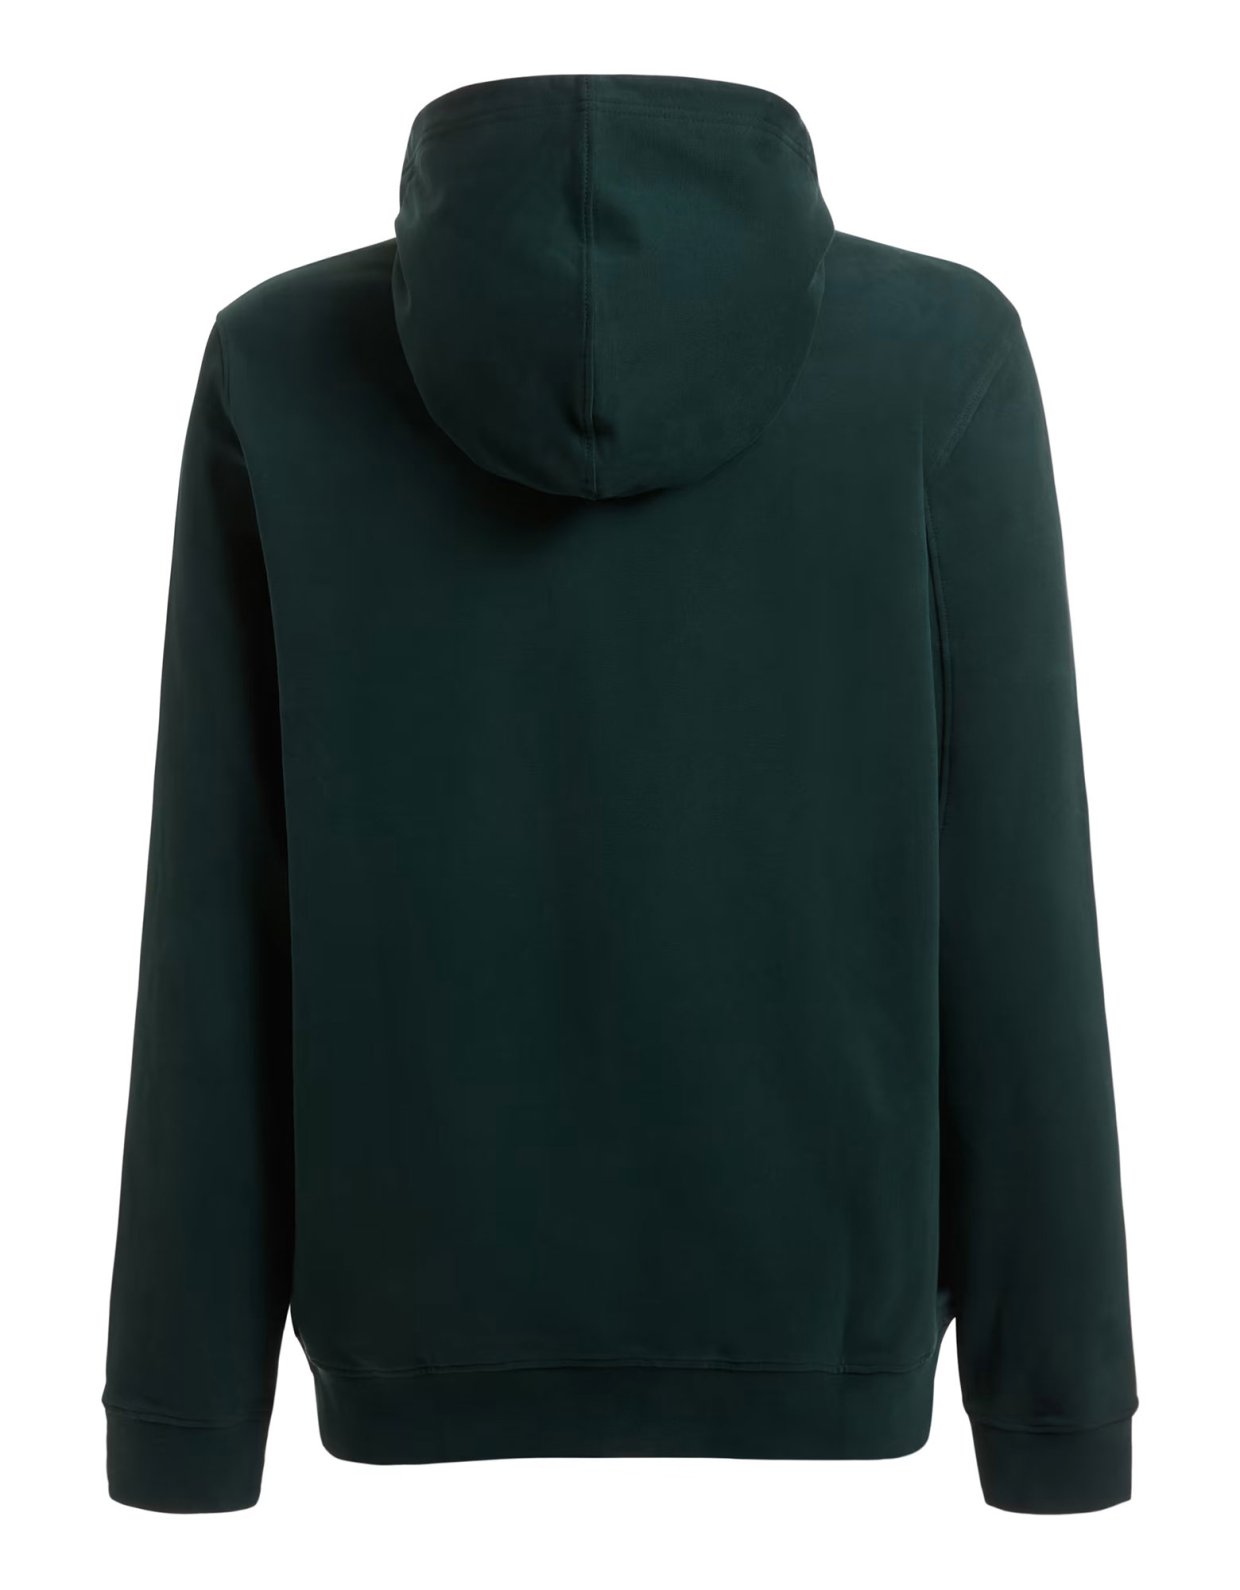 Guess Beau hoodie fleece sweatshirt green